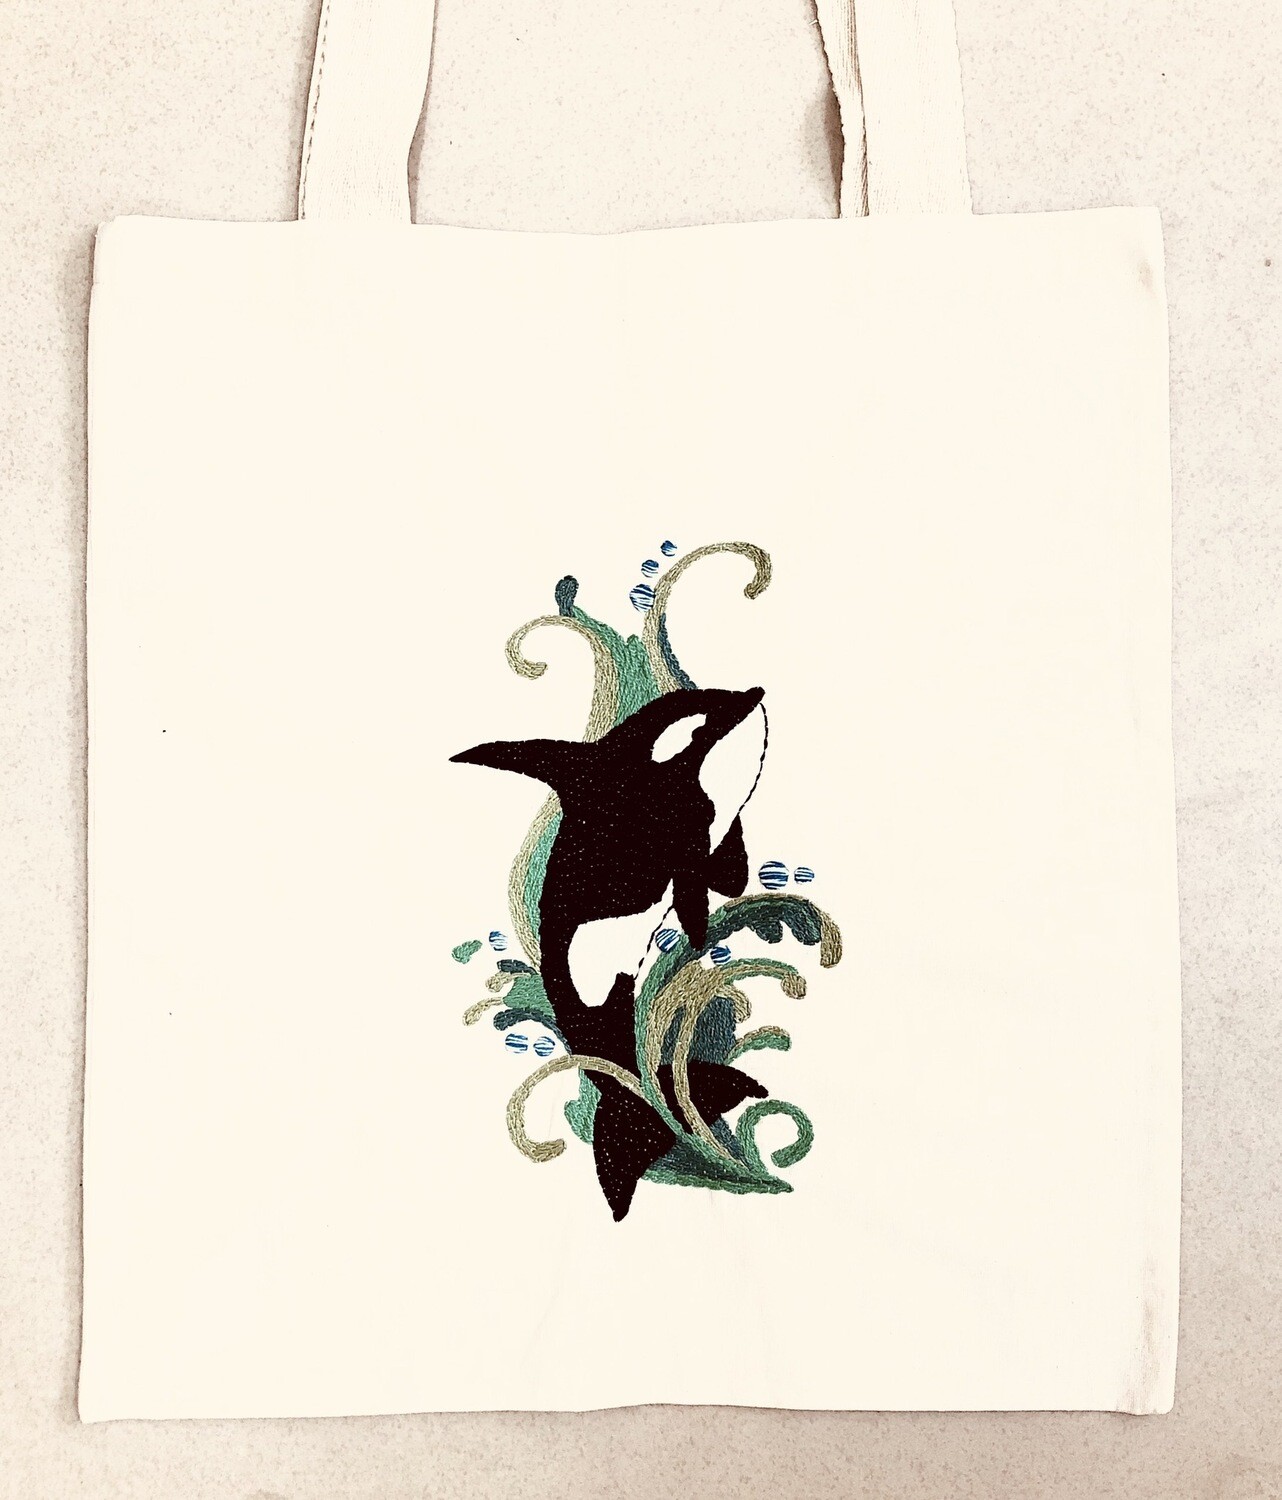 Embroidered bag - Whale /
38 × 47 cm /
شنطة تطريز - حوت